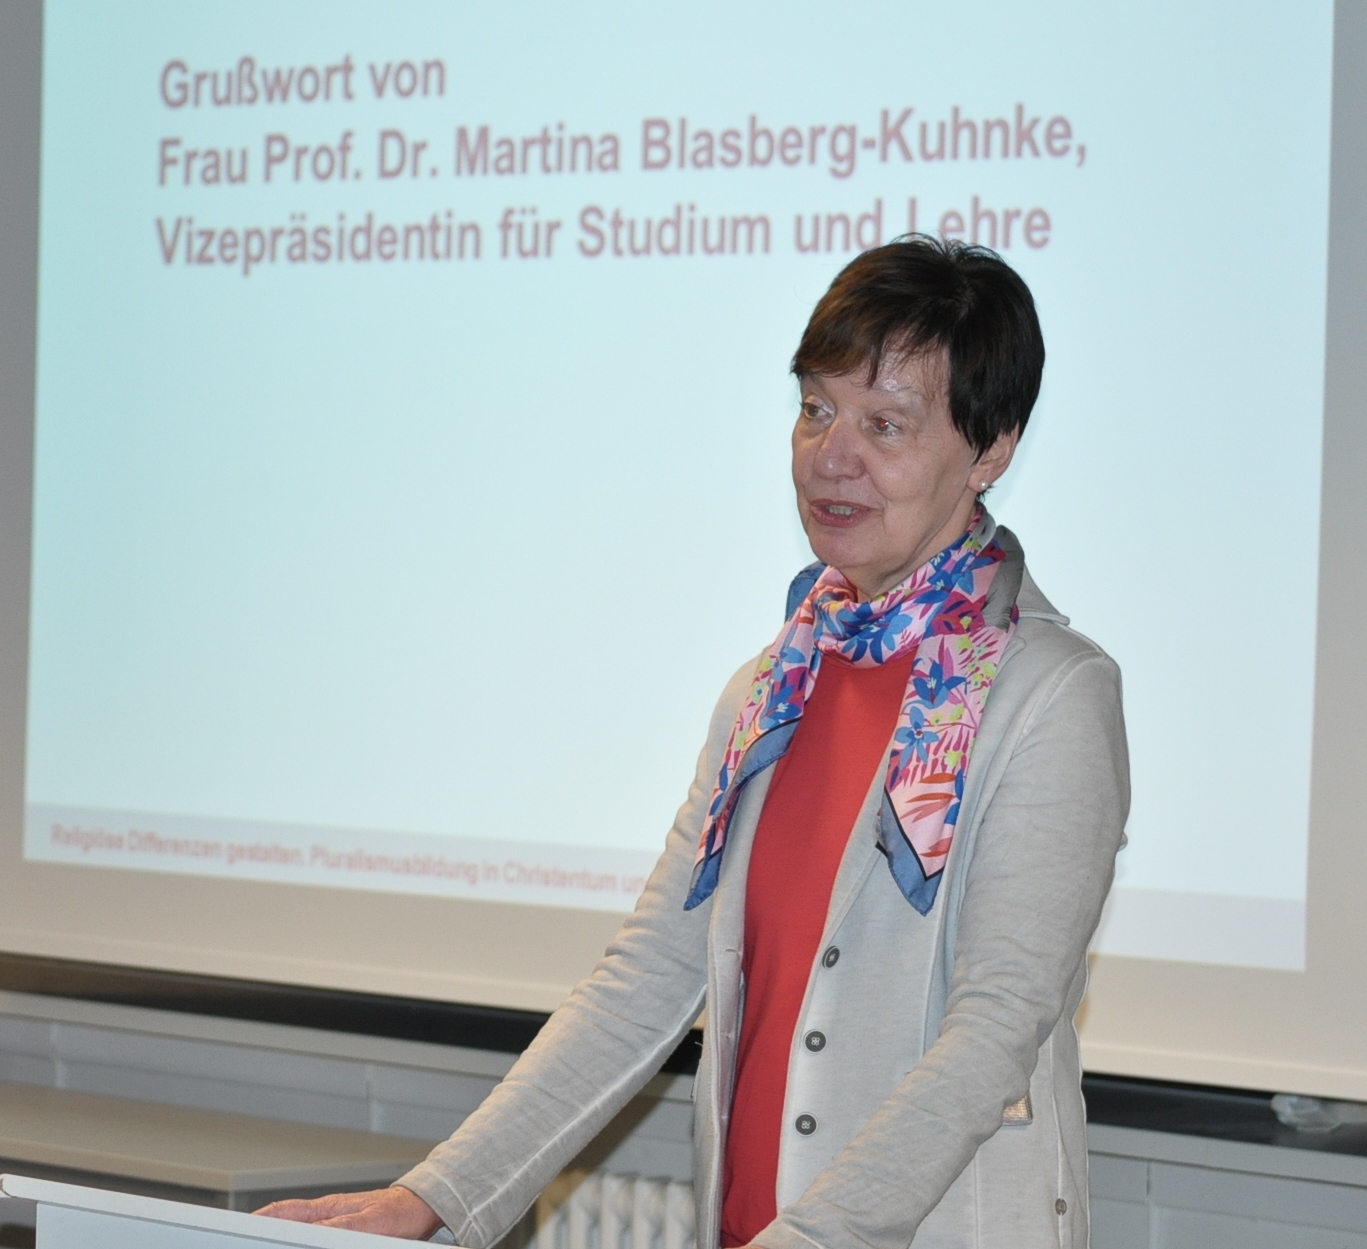 Foto Vincent Peltz
Prof. Dr. theol. Martina Blasberg-Kuhnke 